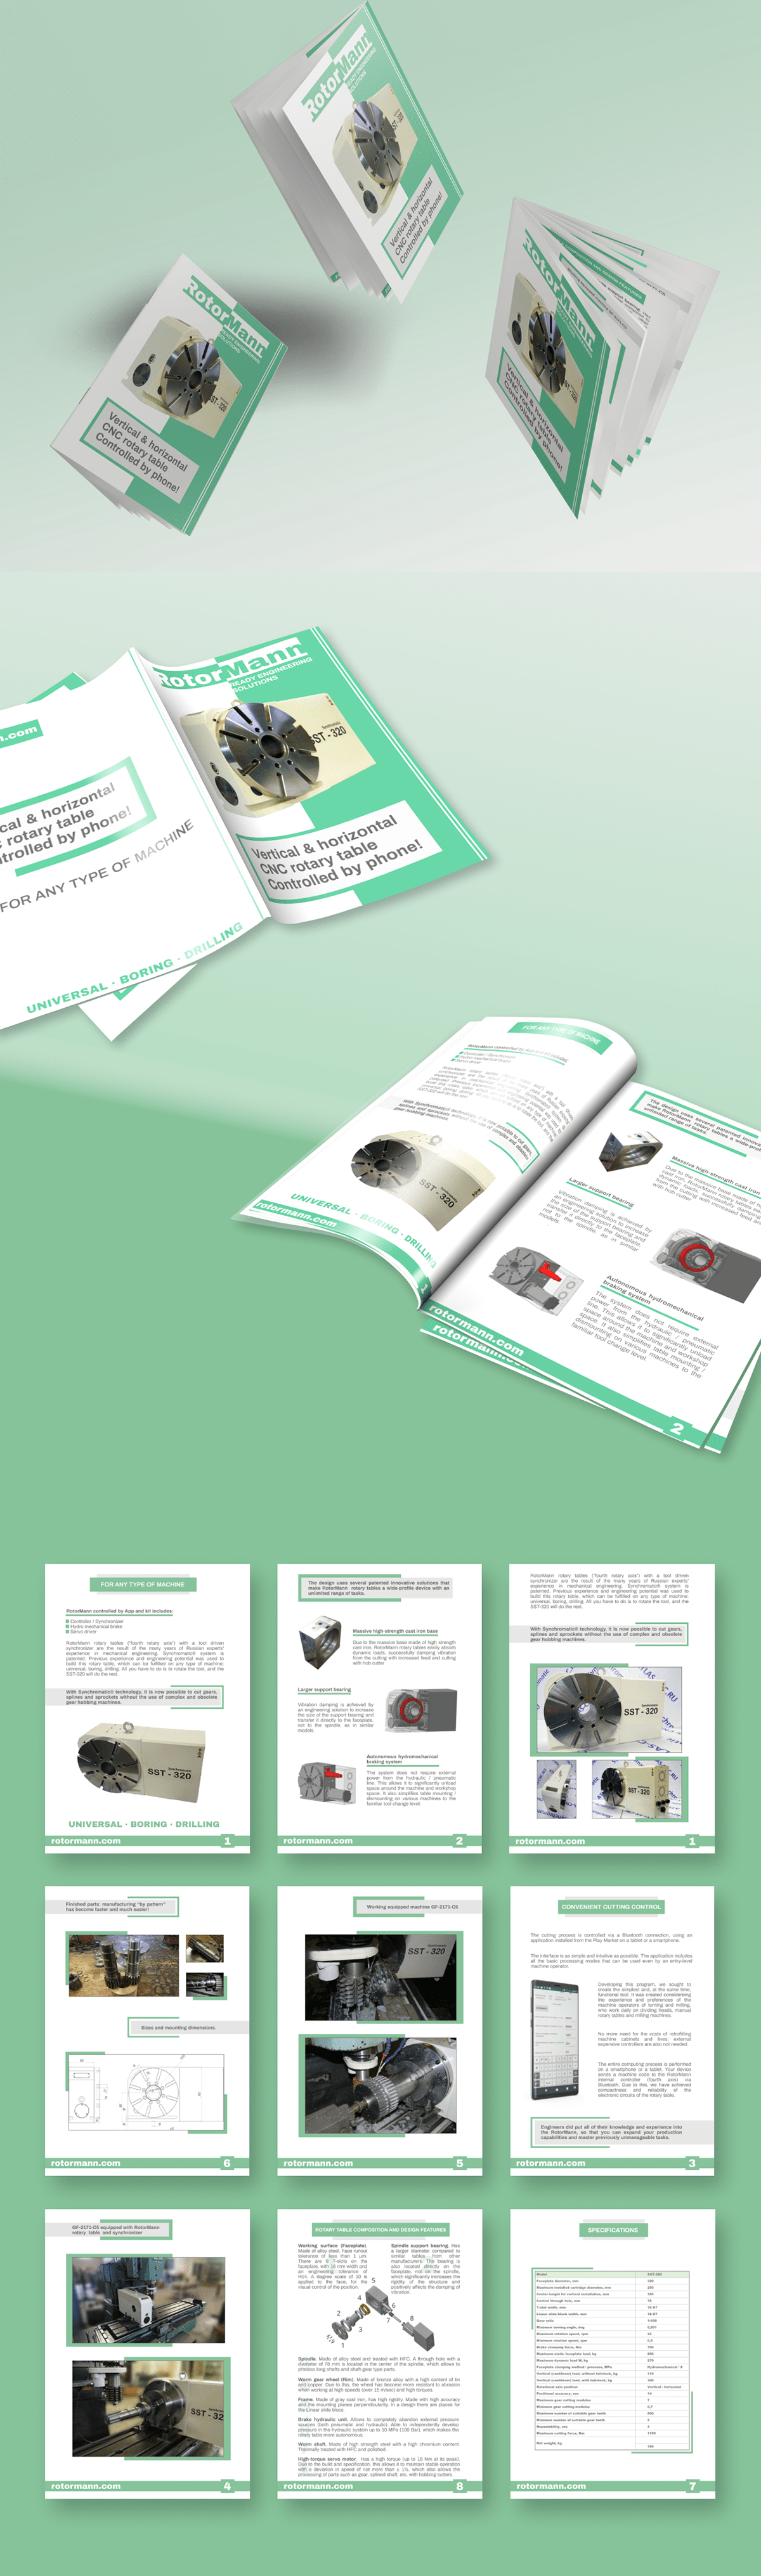 brandbook КОММЕРЧЕСКОЕ ПРЕДЛОЖЕНИЕ презентация marketing-kit маркетинг кит